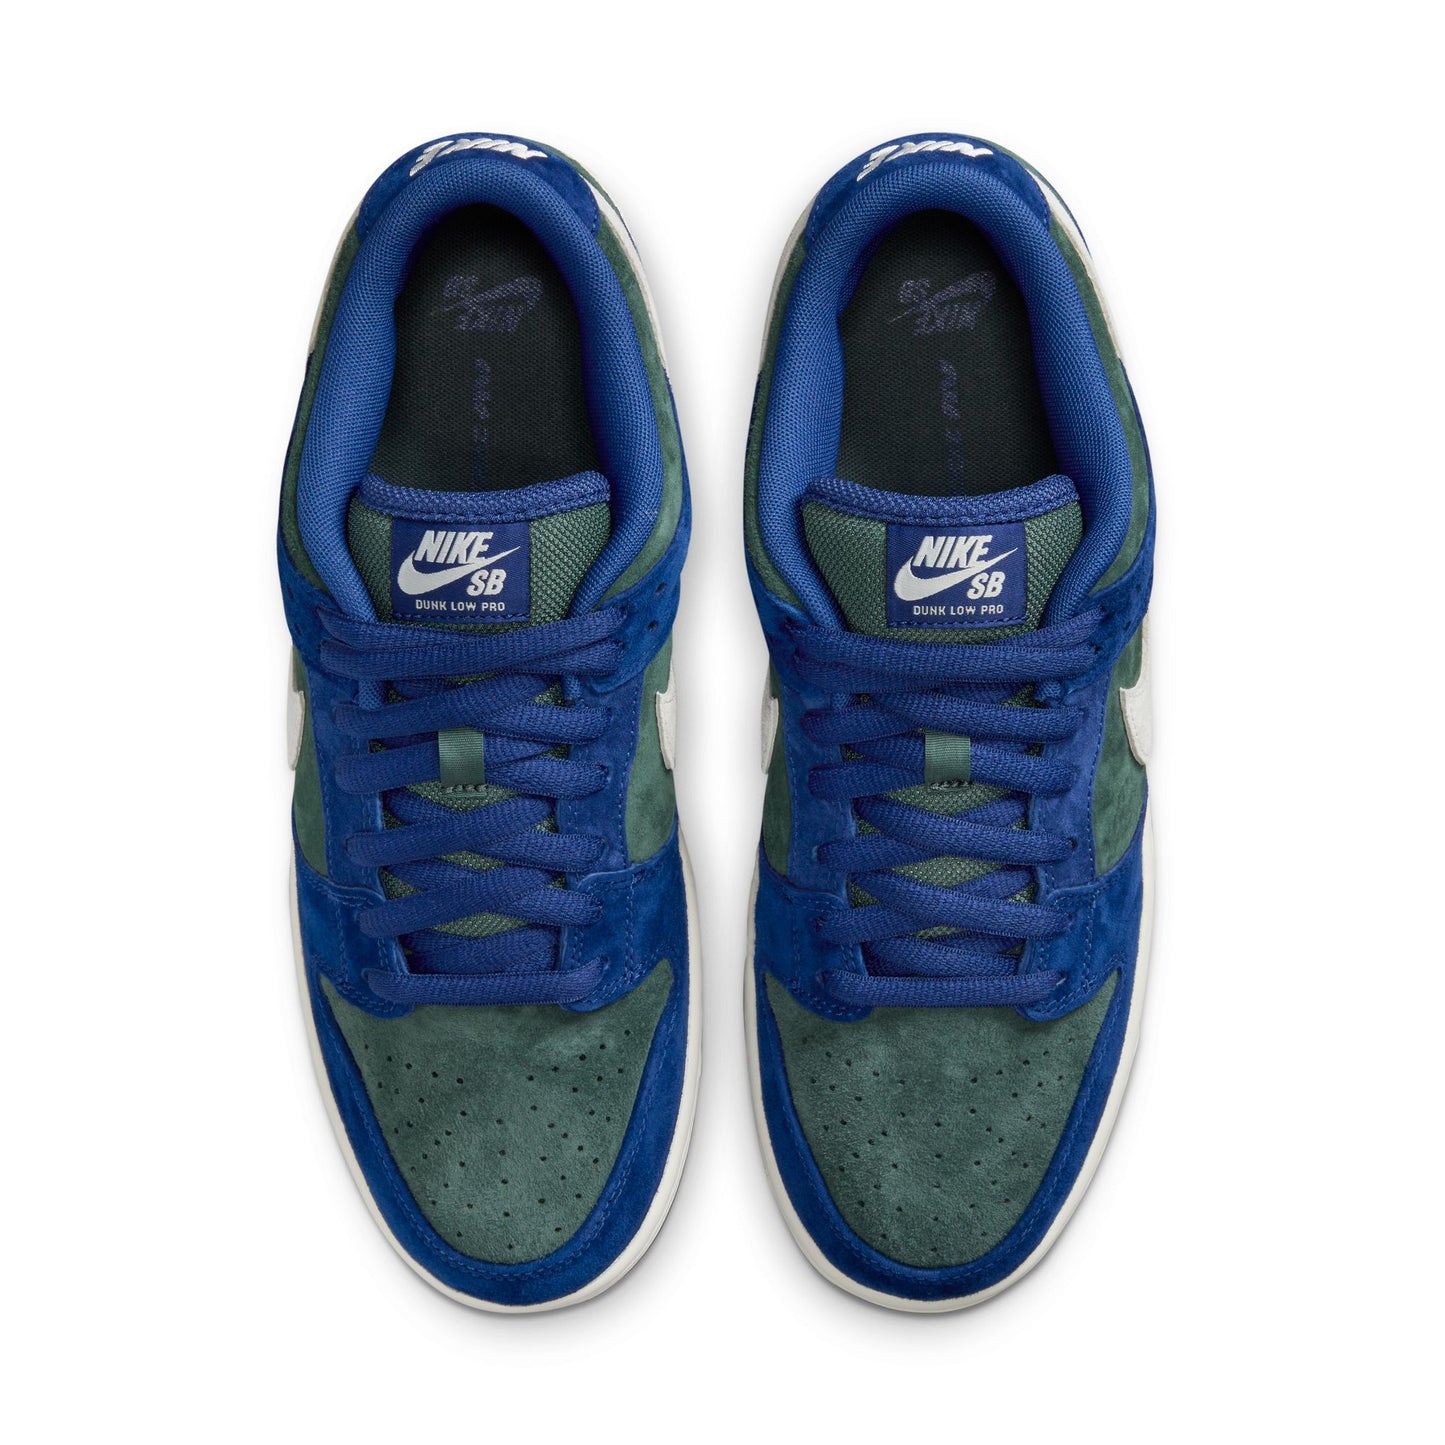 Nike SB Dunk Low Pro deep royal blue sail vintage green